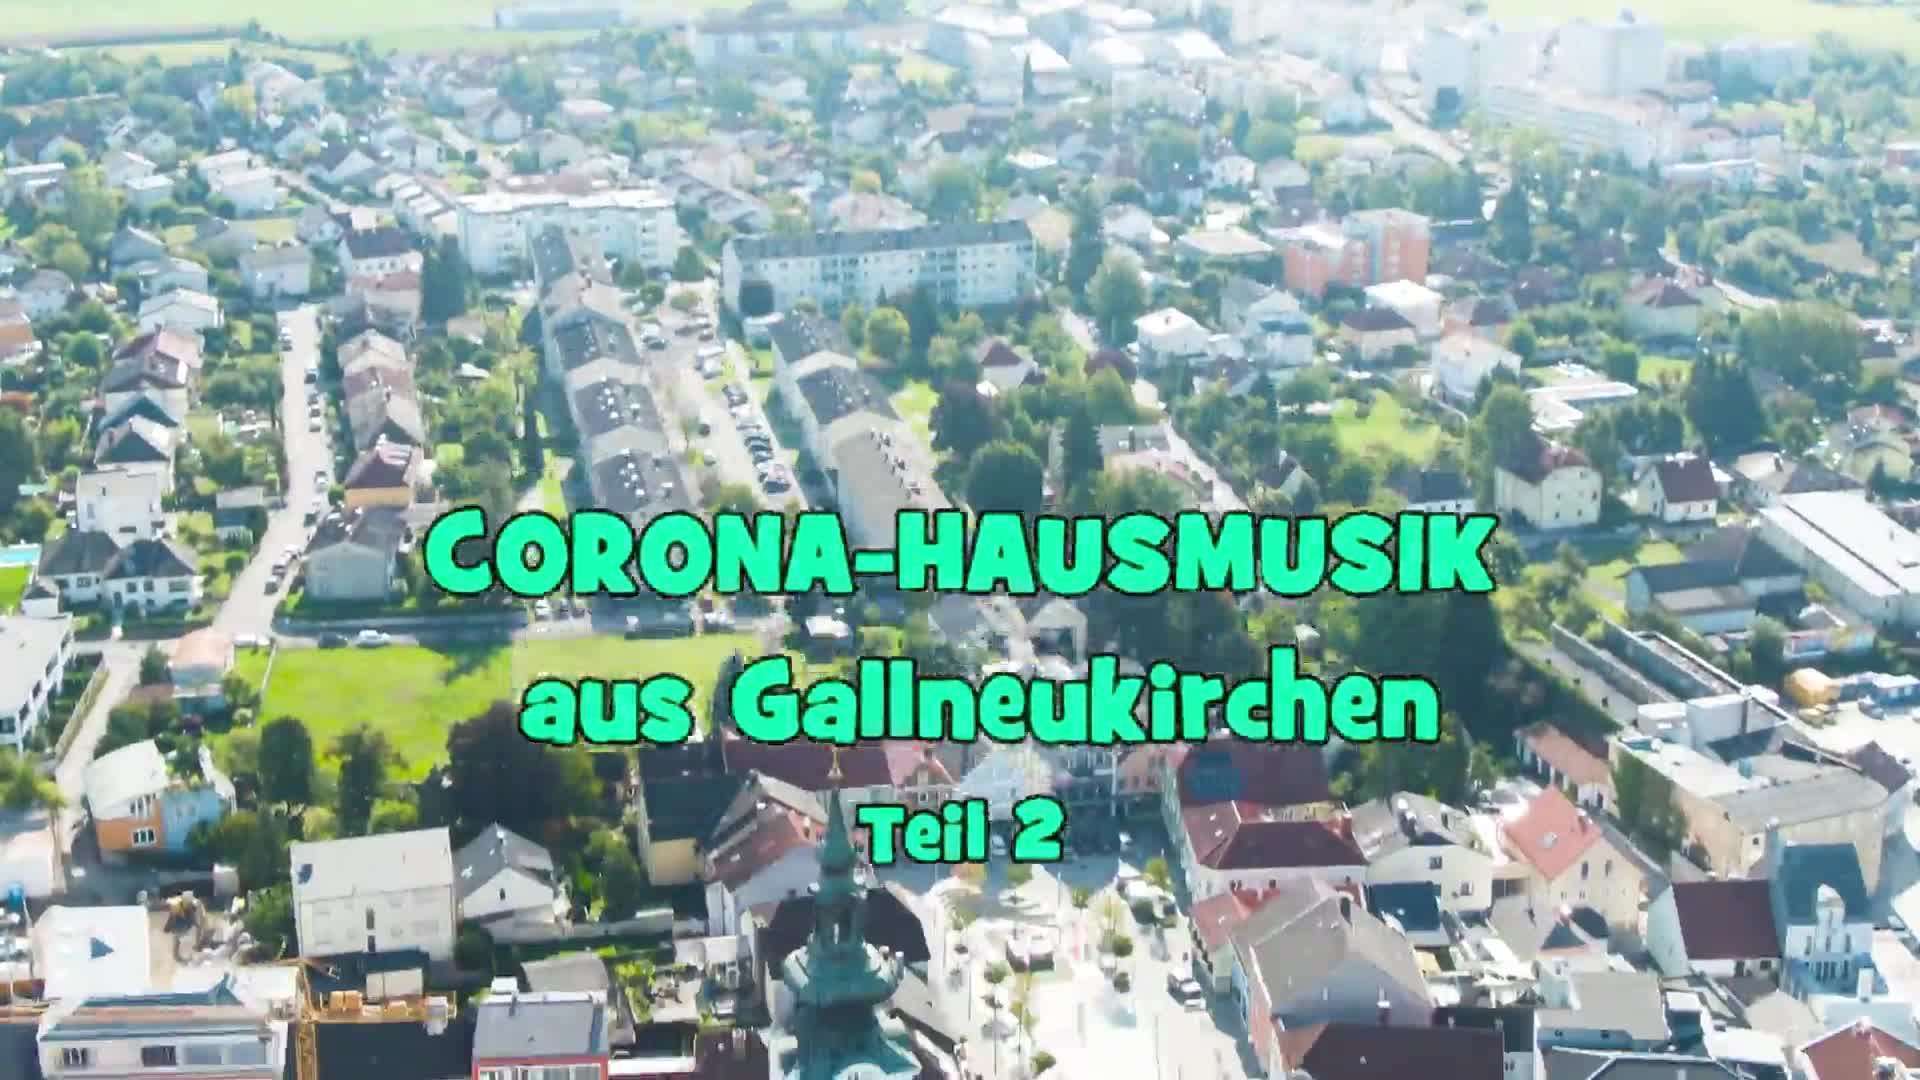 Corona - Hausmusik aus Gallneukirchen, Teil 2